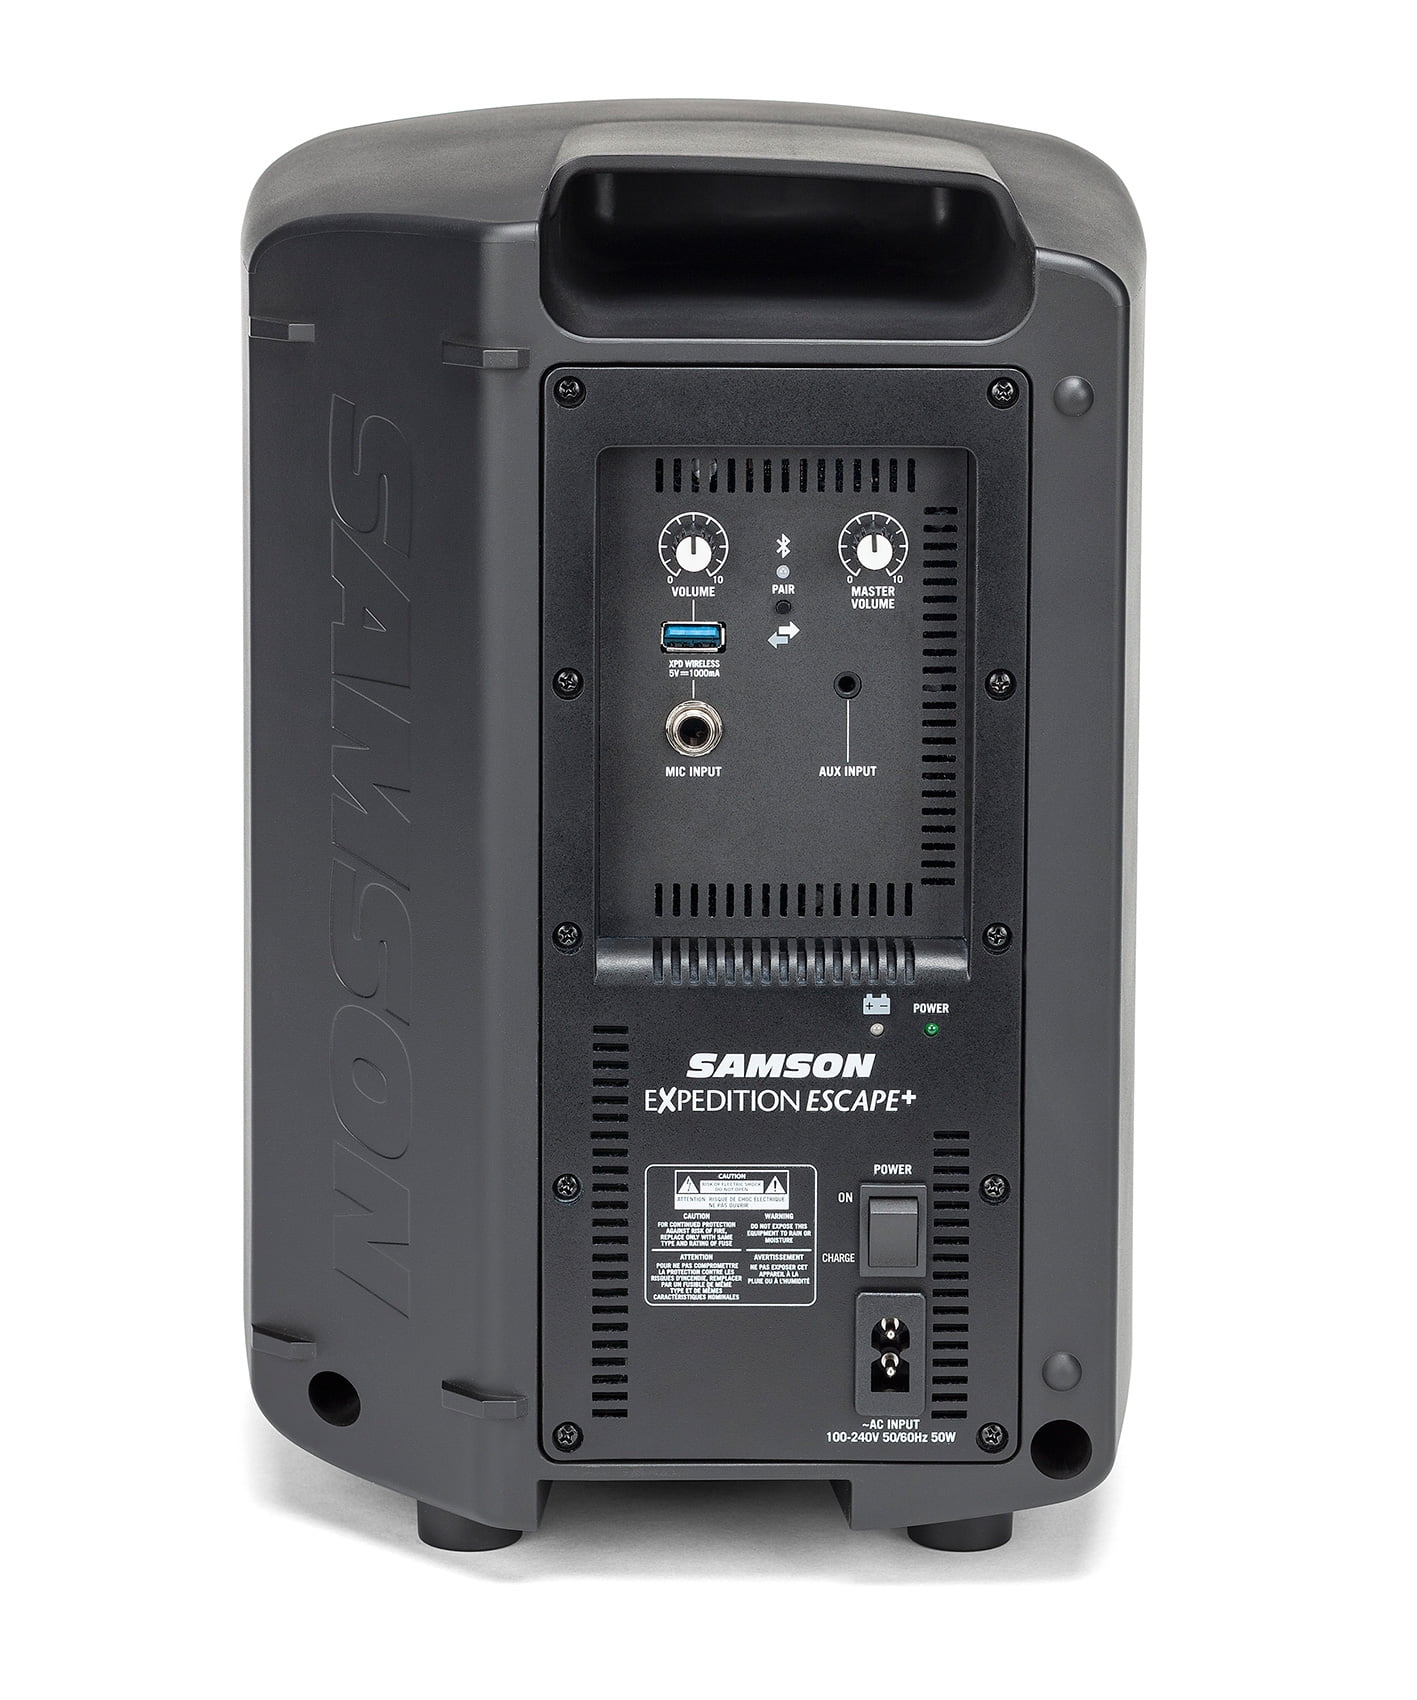 Samson Expedition Escape+ 6 Portable PA Rechargeable Speaker w